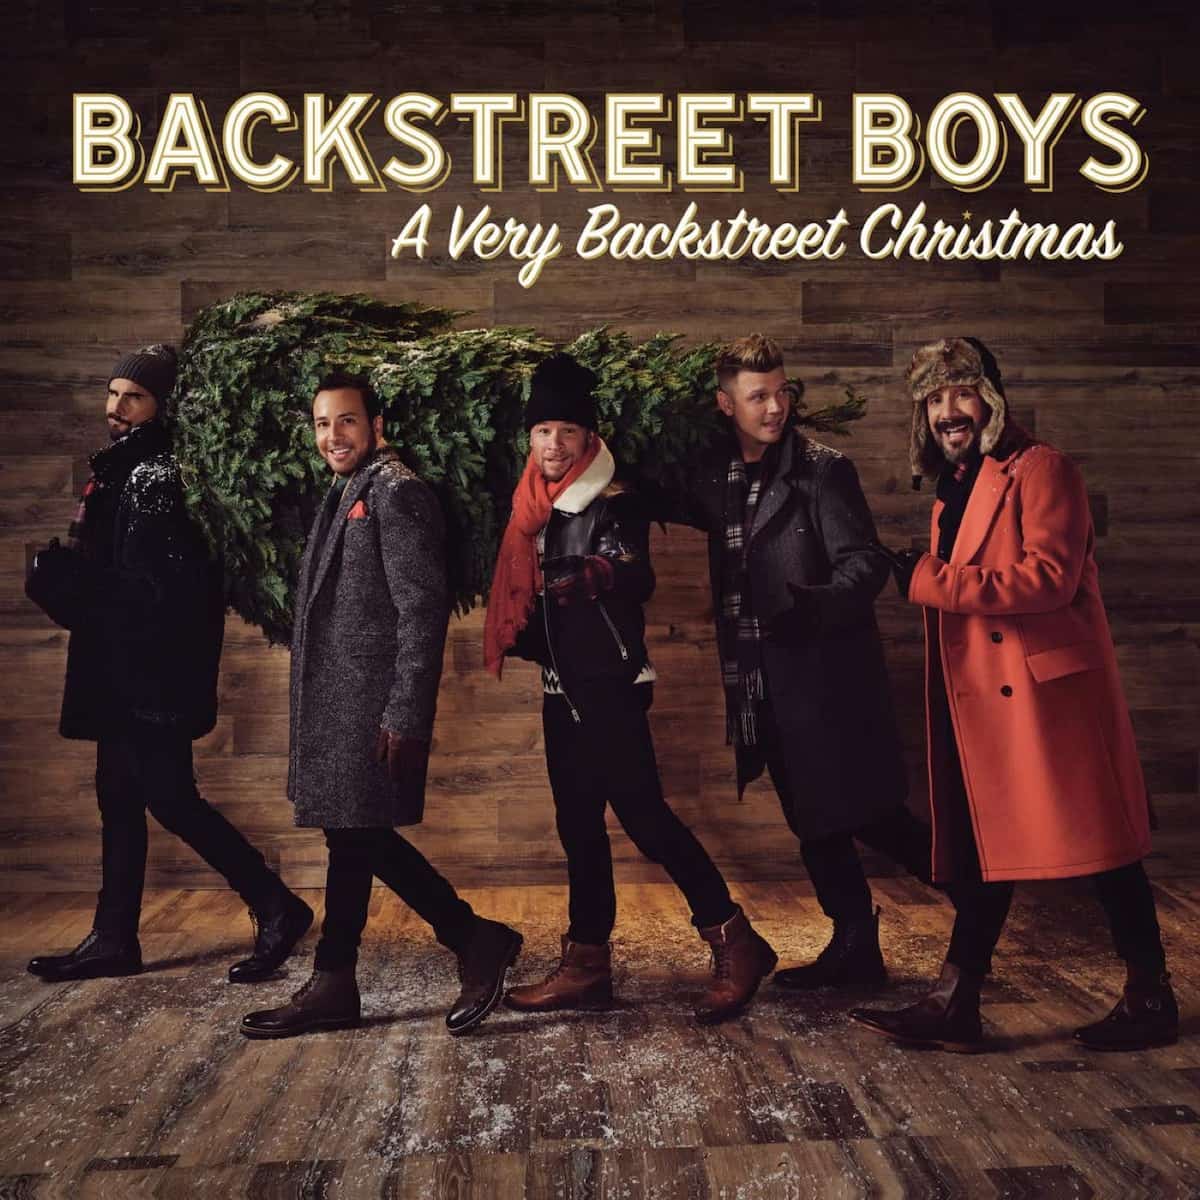 Backstreet Boys “A Very Backstreet Christmas” 2022